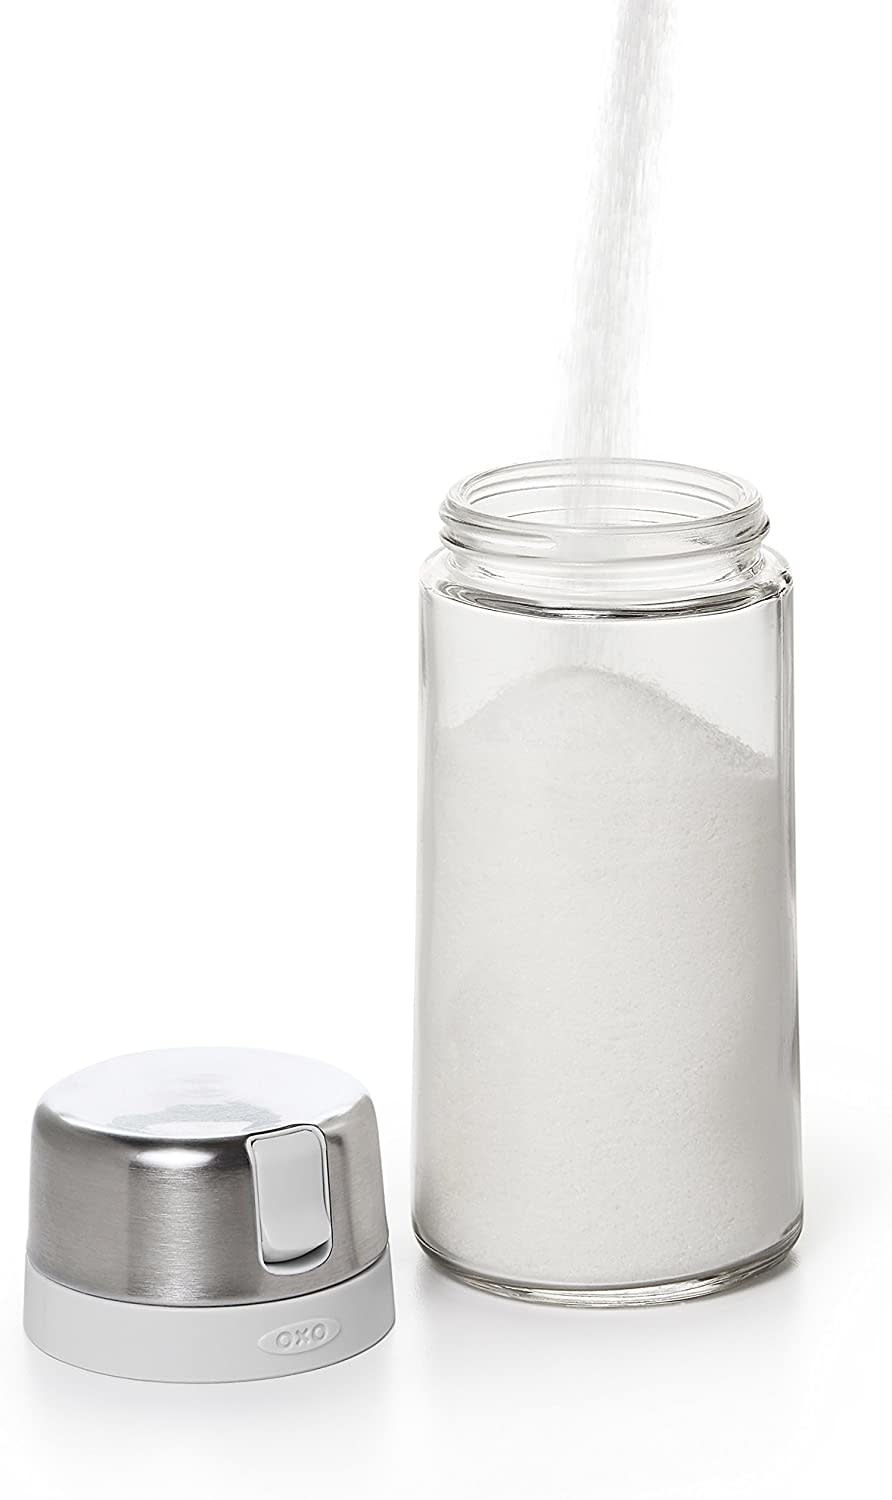 OXO Good Grips Sugar Dispenser 9oz. Stainless Steel Clear/White